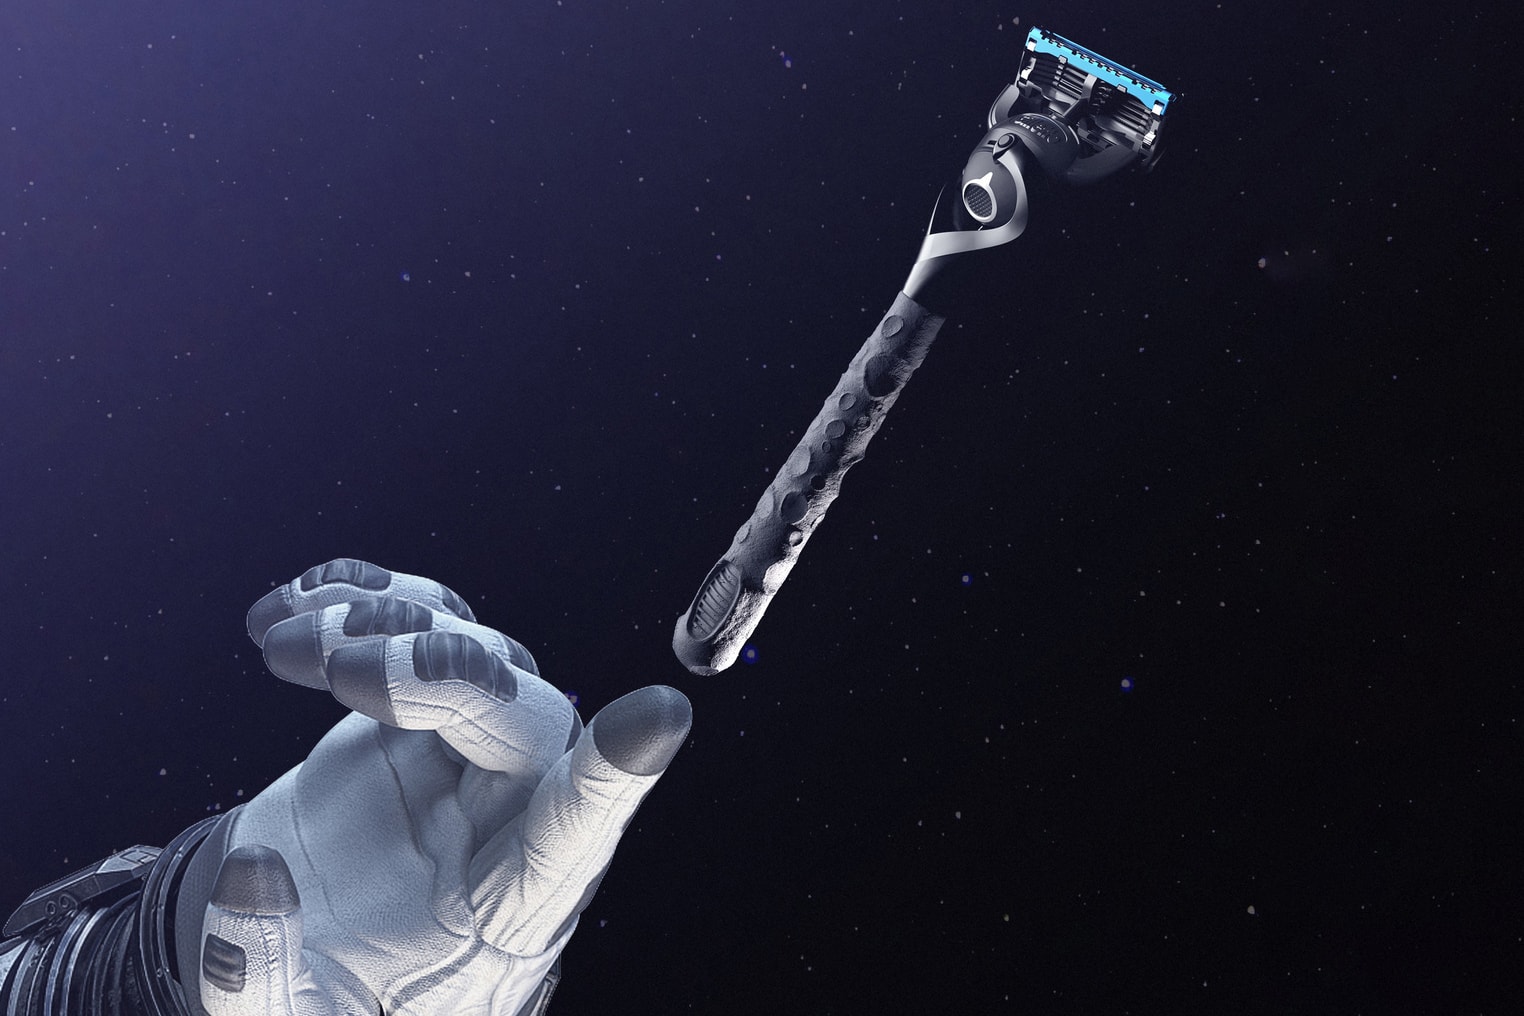 Gillette Razor Maker Apollo 50th Anniversary Release moon landing 3D printing shaving men's grooming Formlabs space travel Fusion5 ProGlide